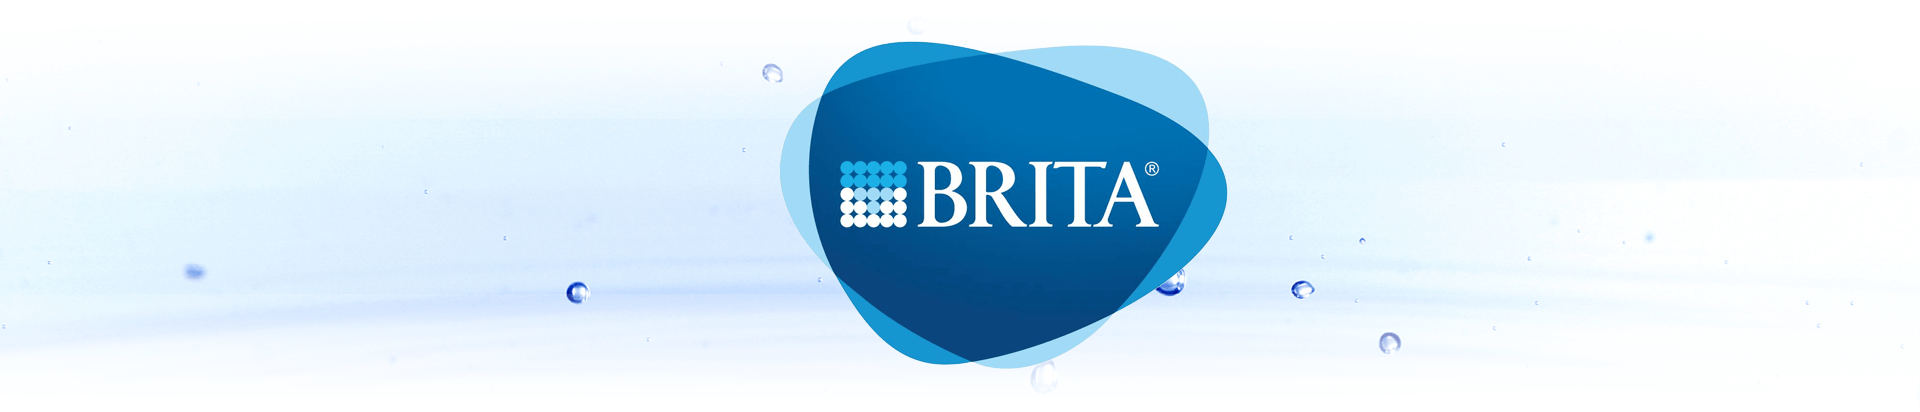 Brita logo